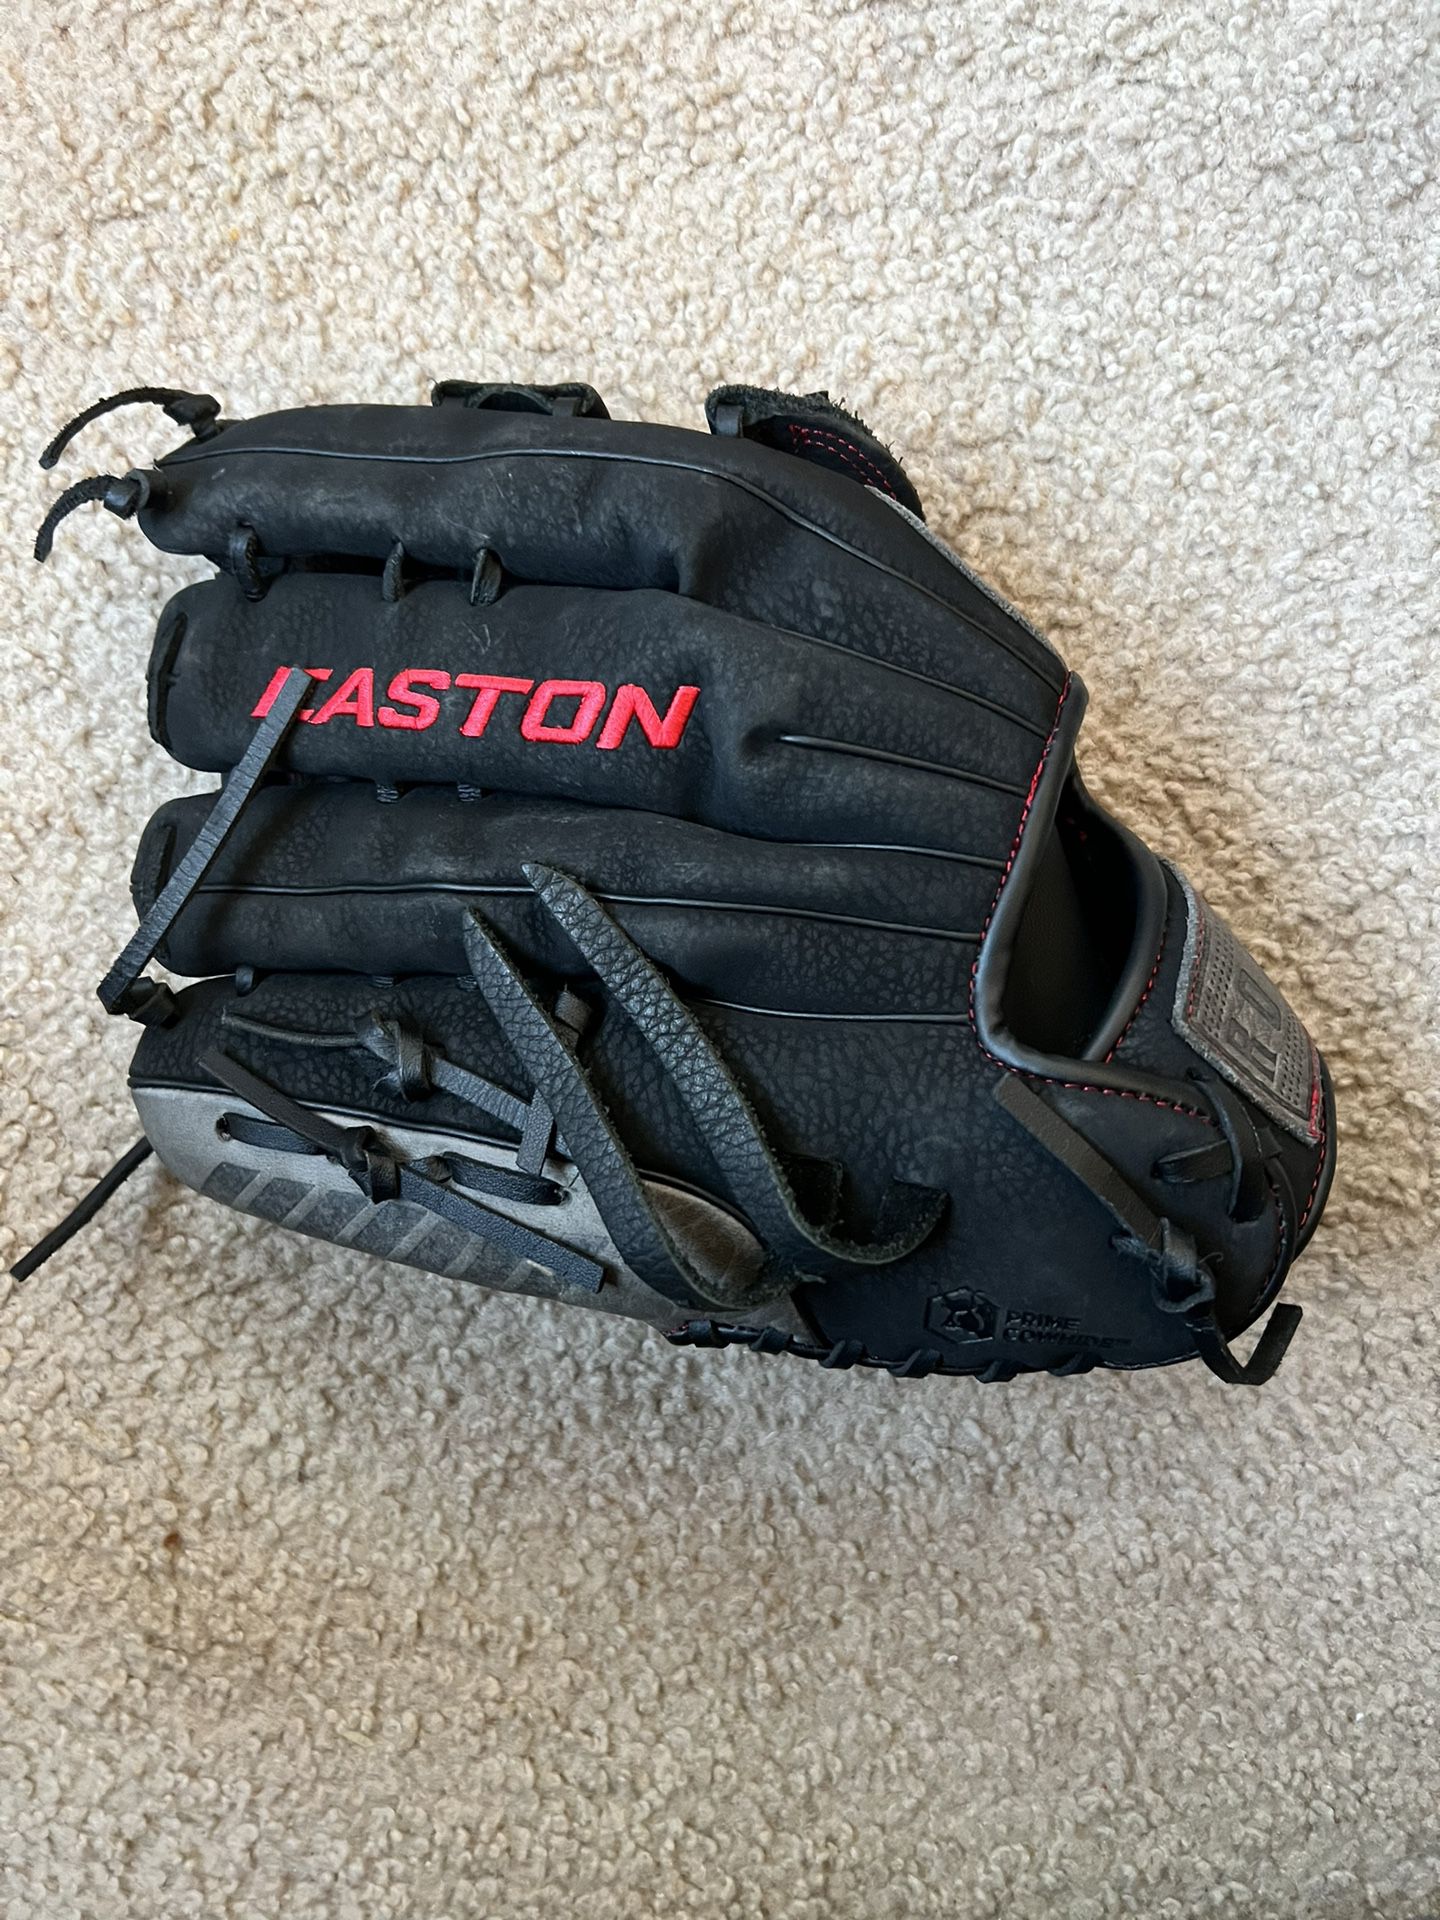 Easton Softball Glove. 13”